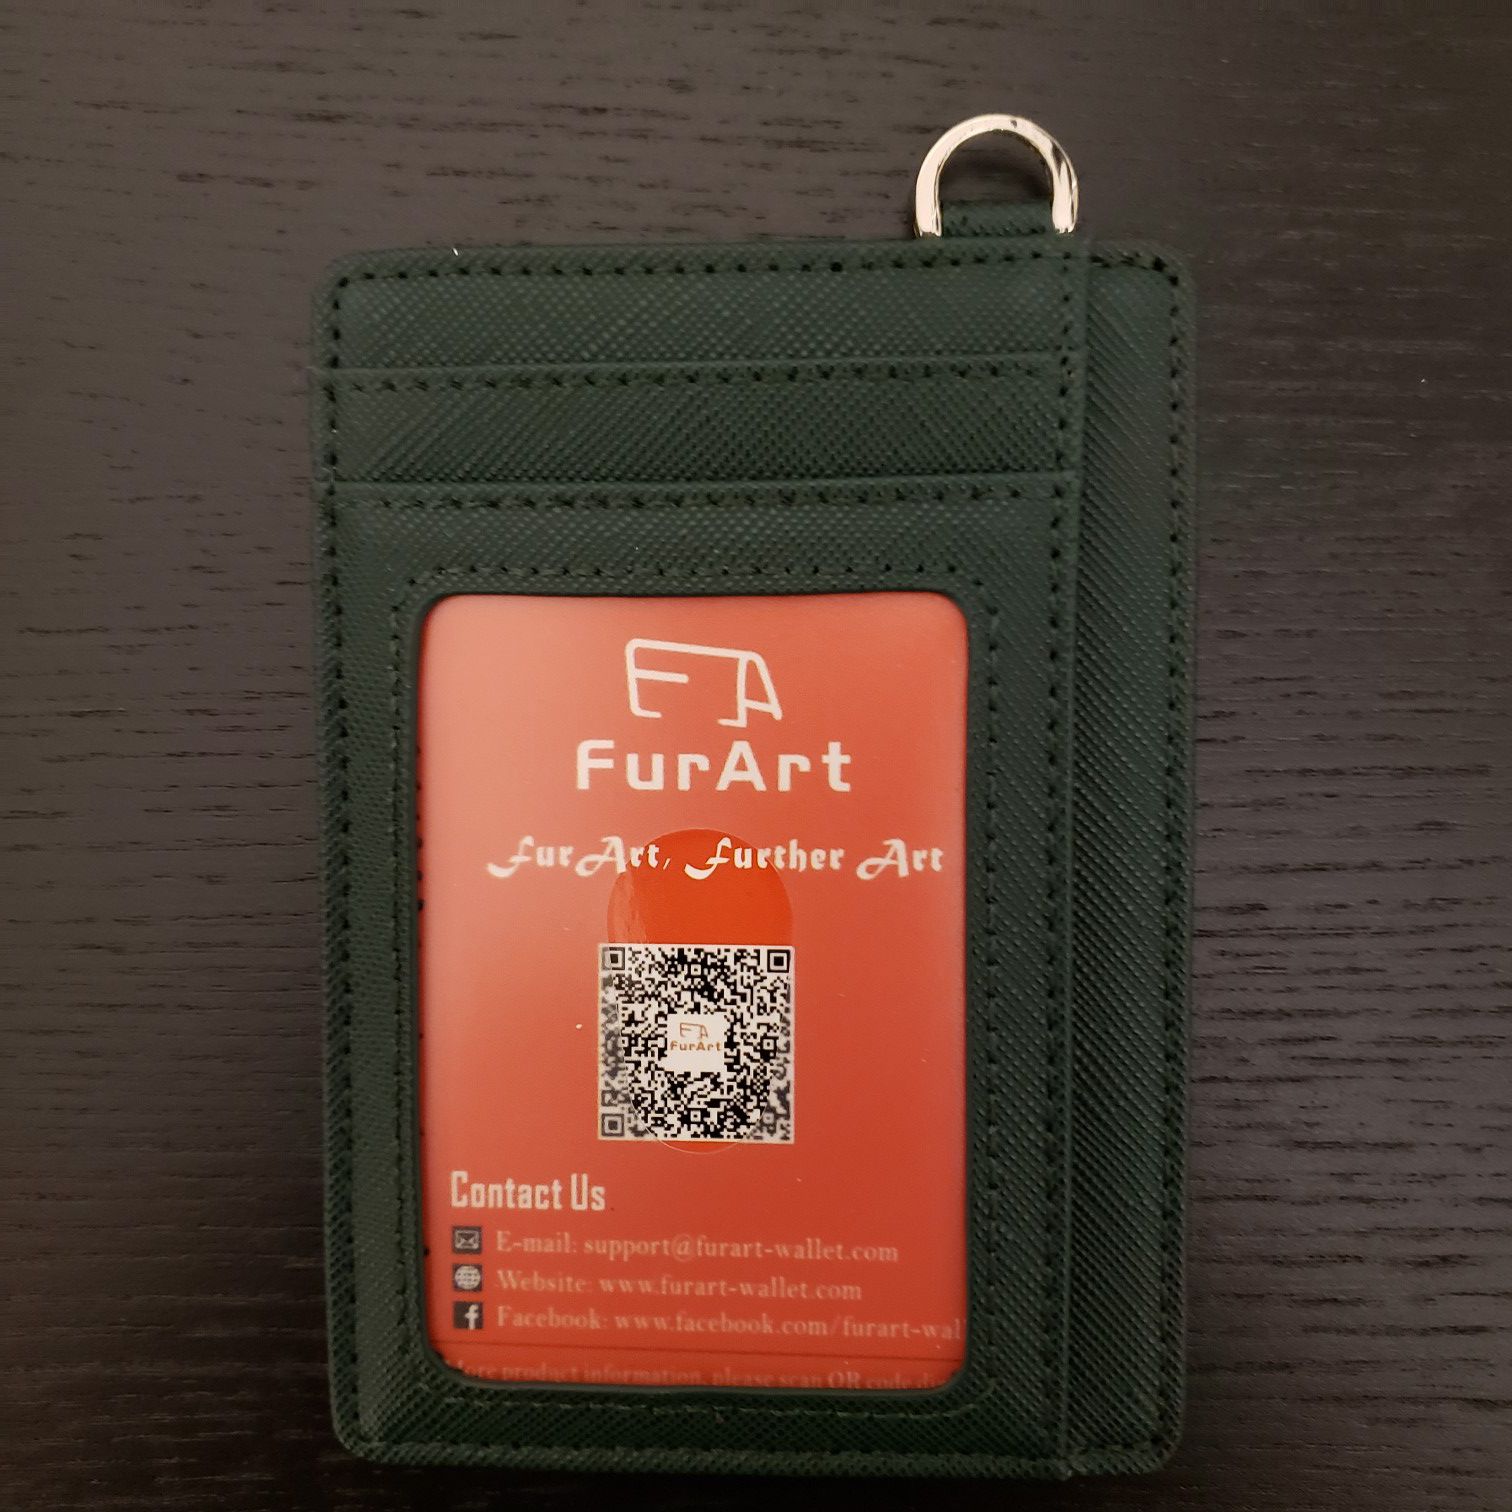 FurArt small green wallet